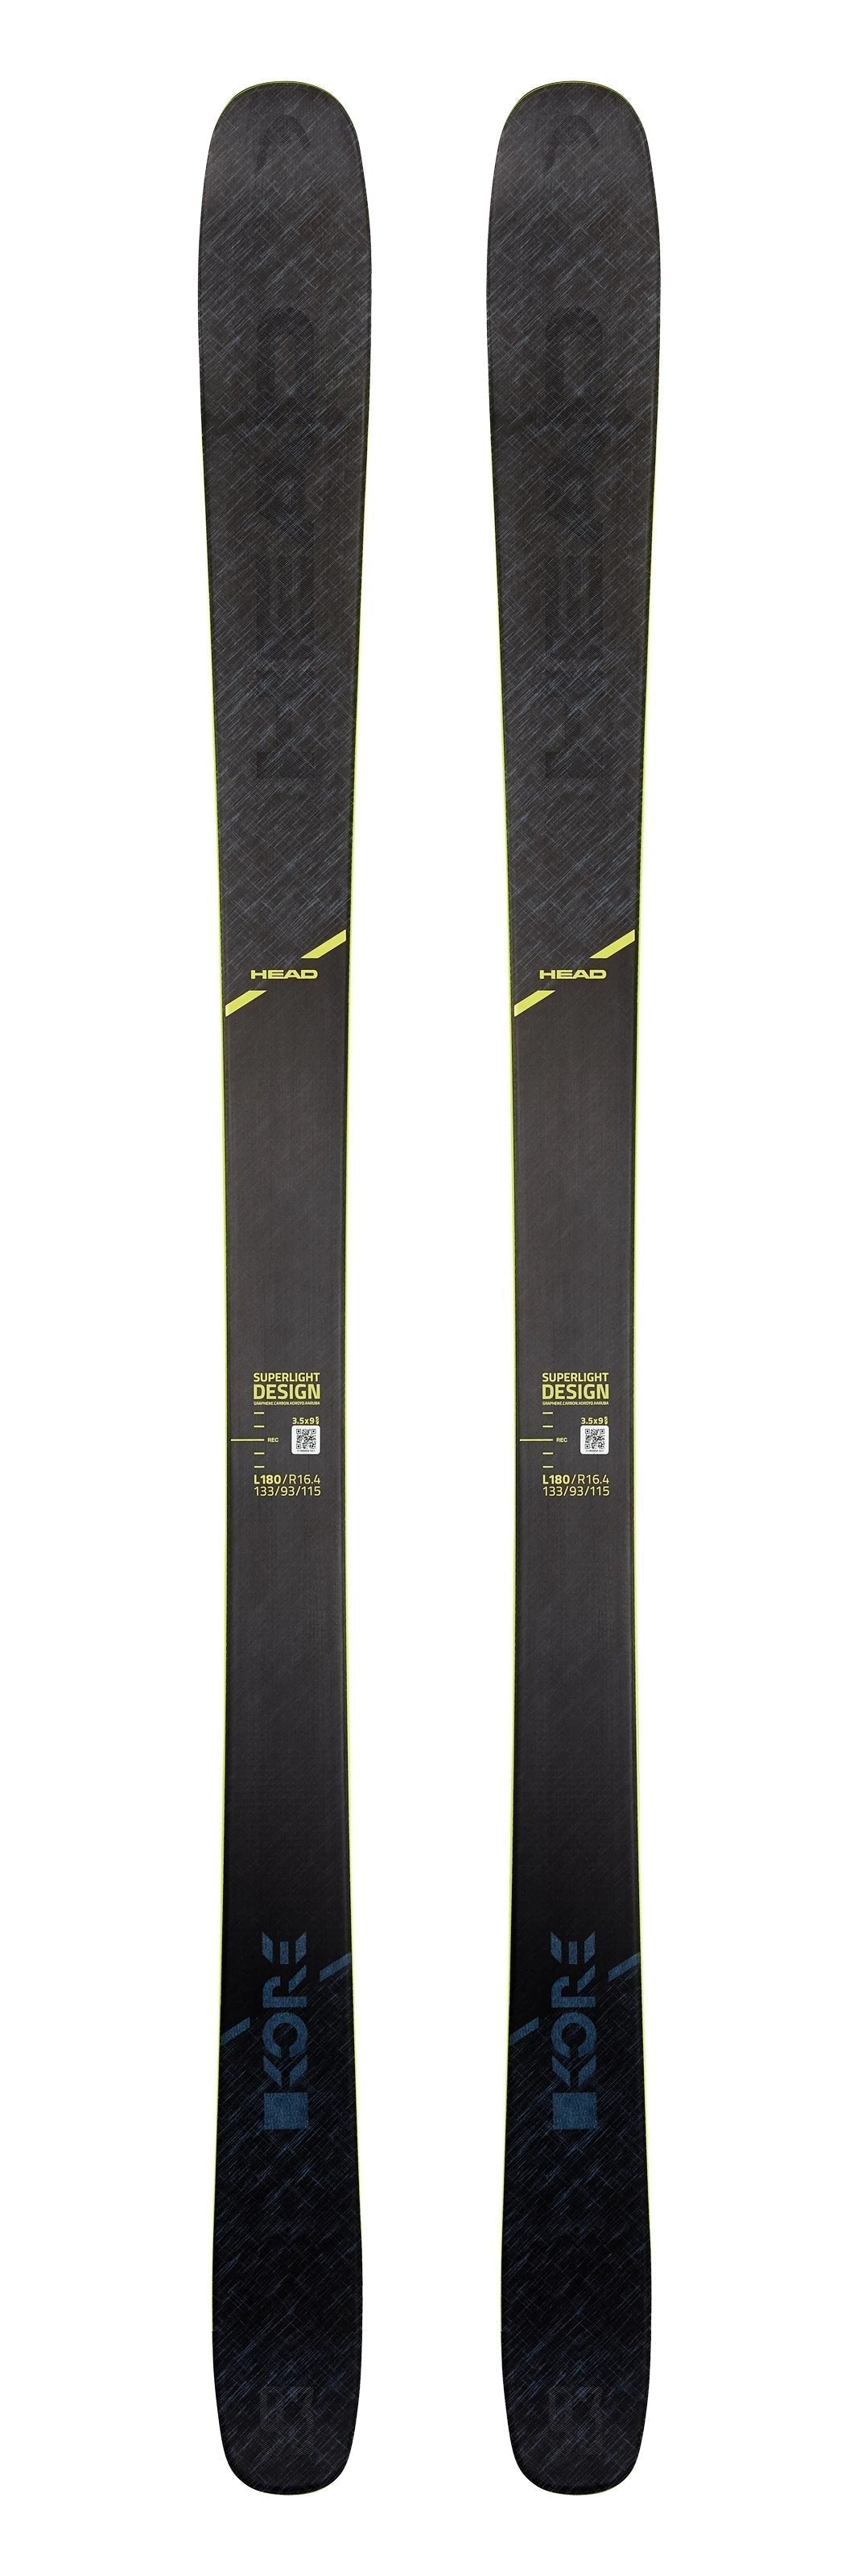 2020 Head Kore 93 snow skis